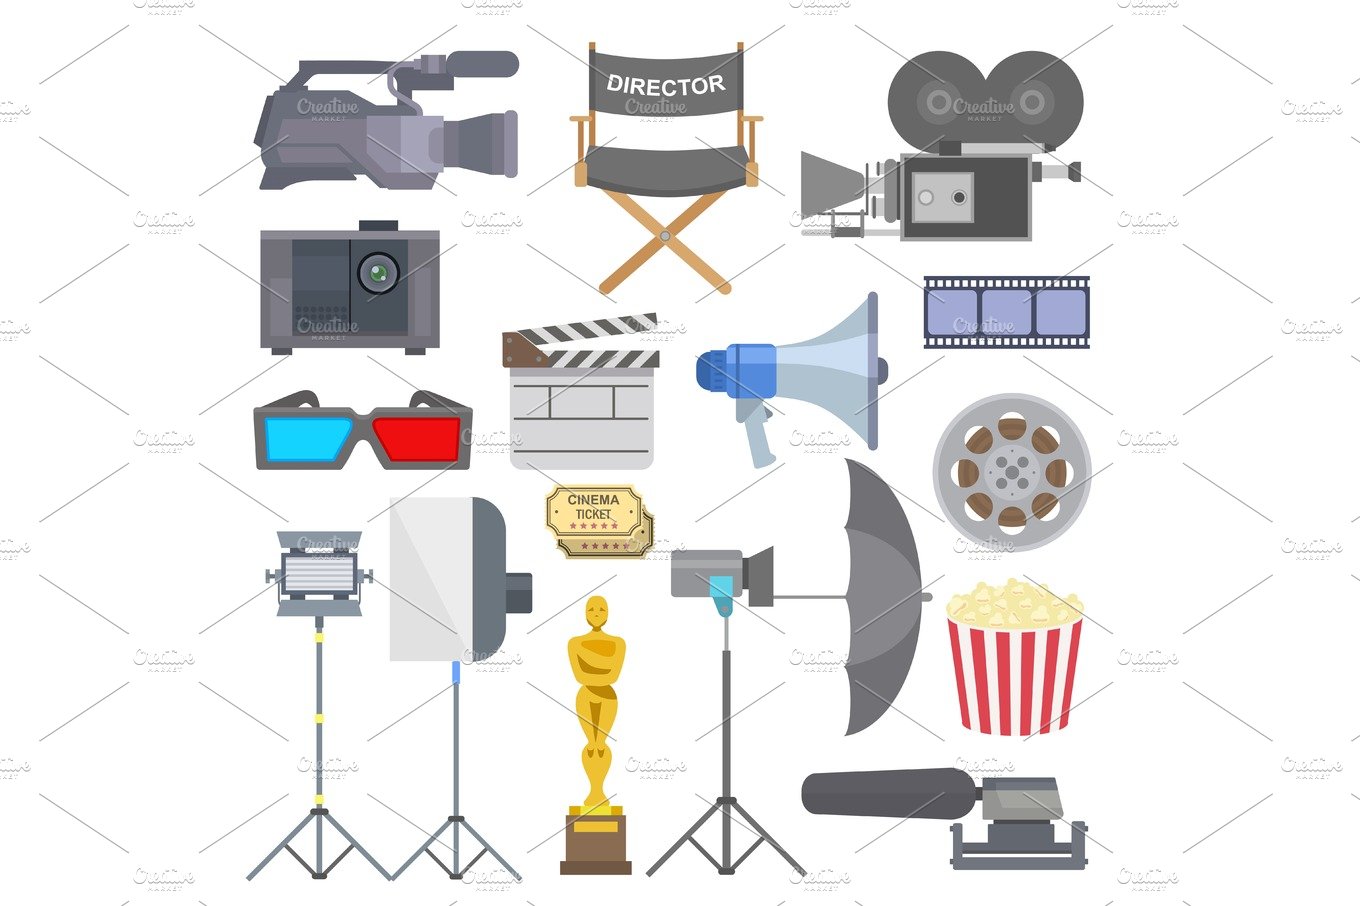 Cinema movie making tv show tools equipment symbols icons vector set illust... cover image.